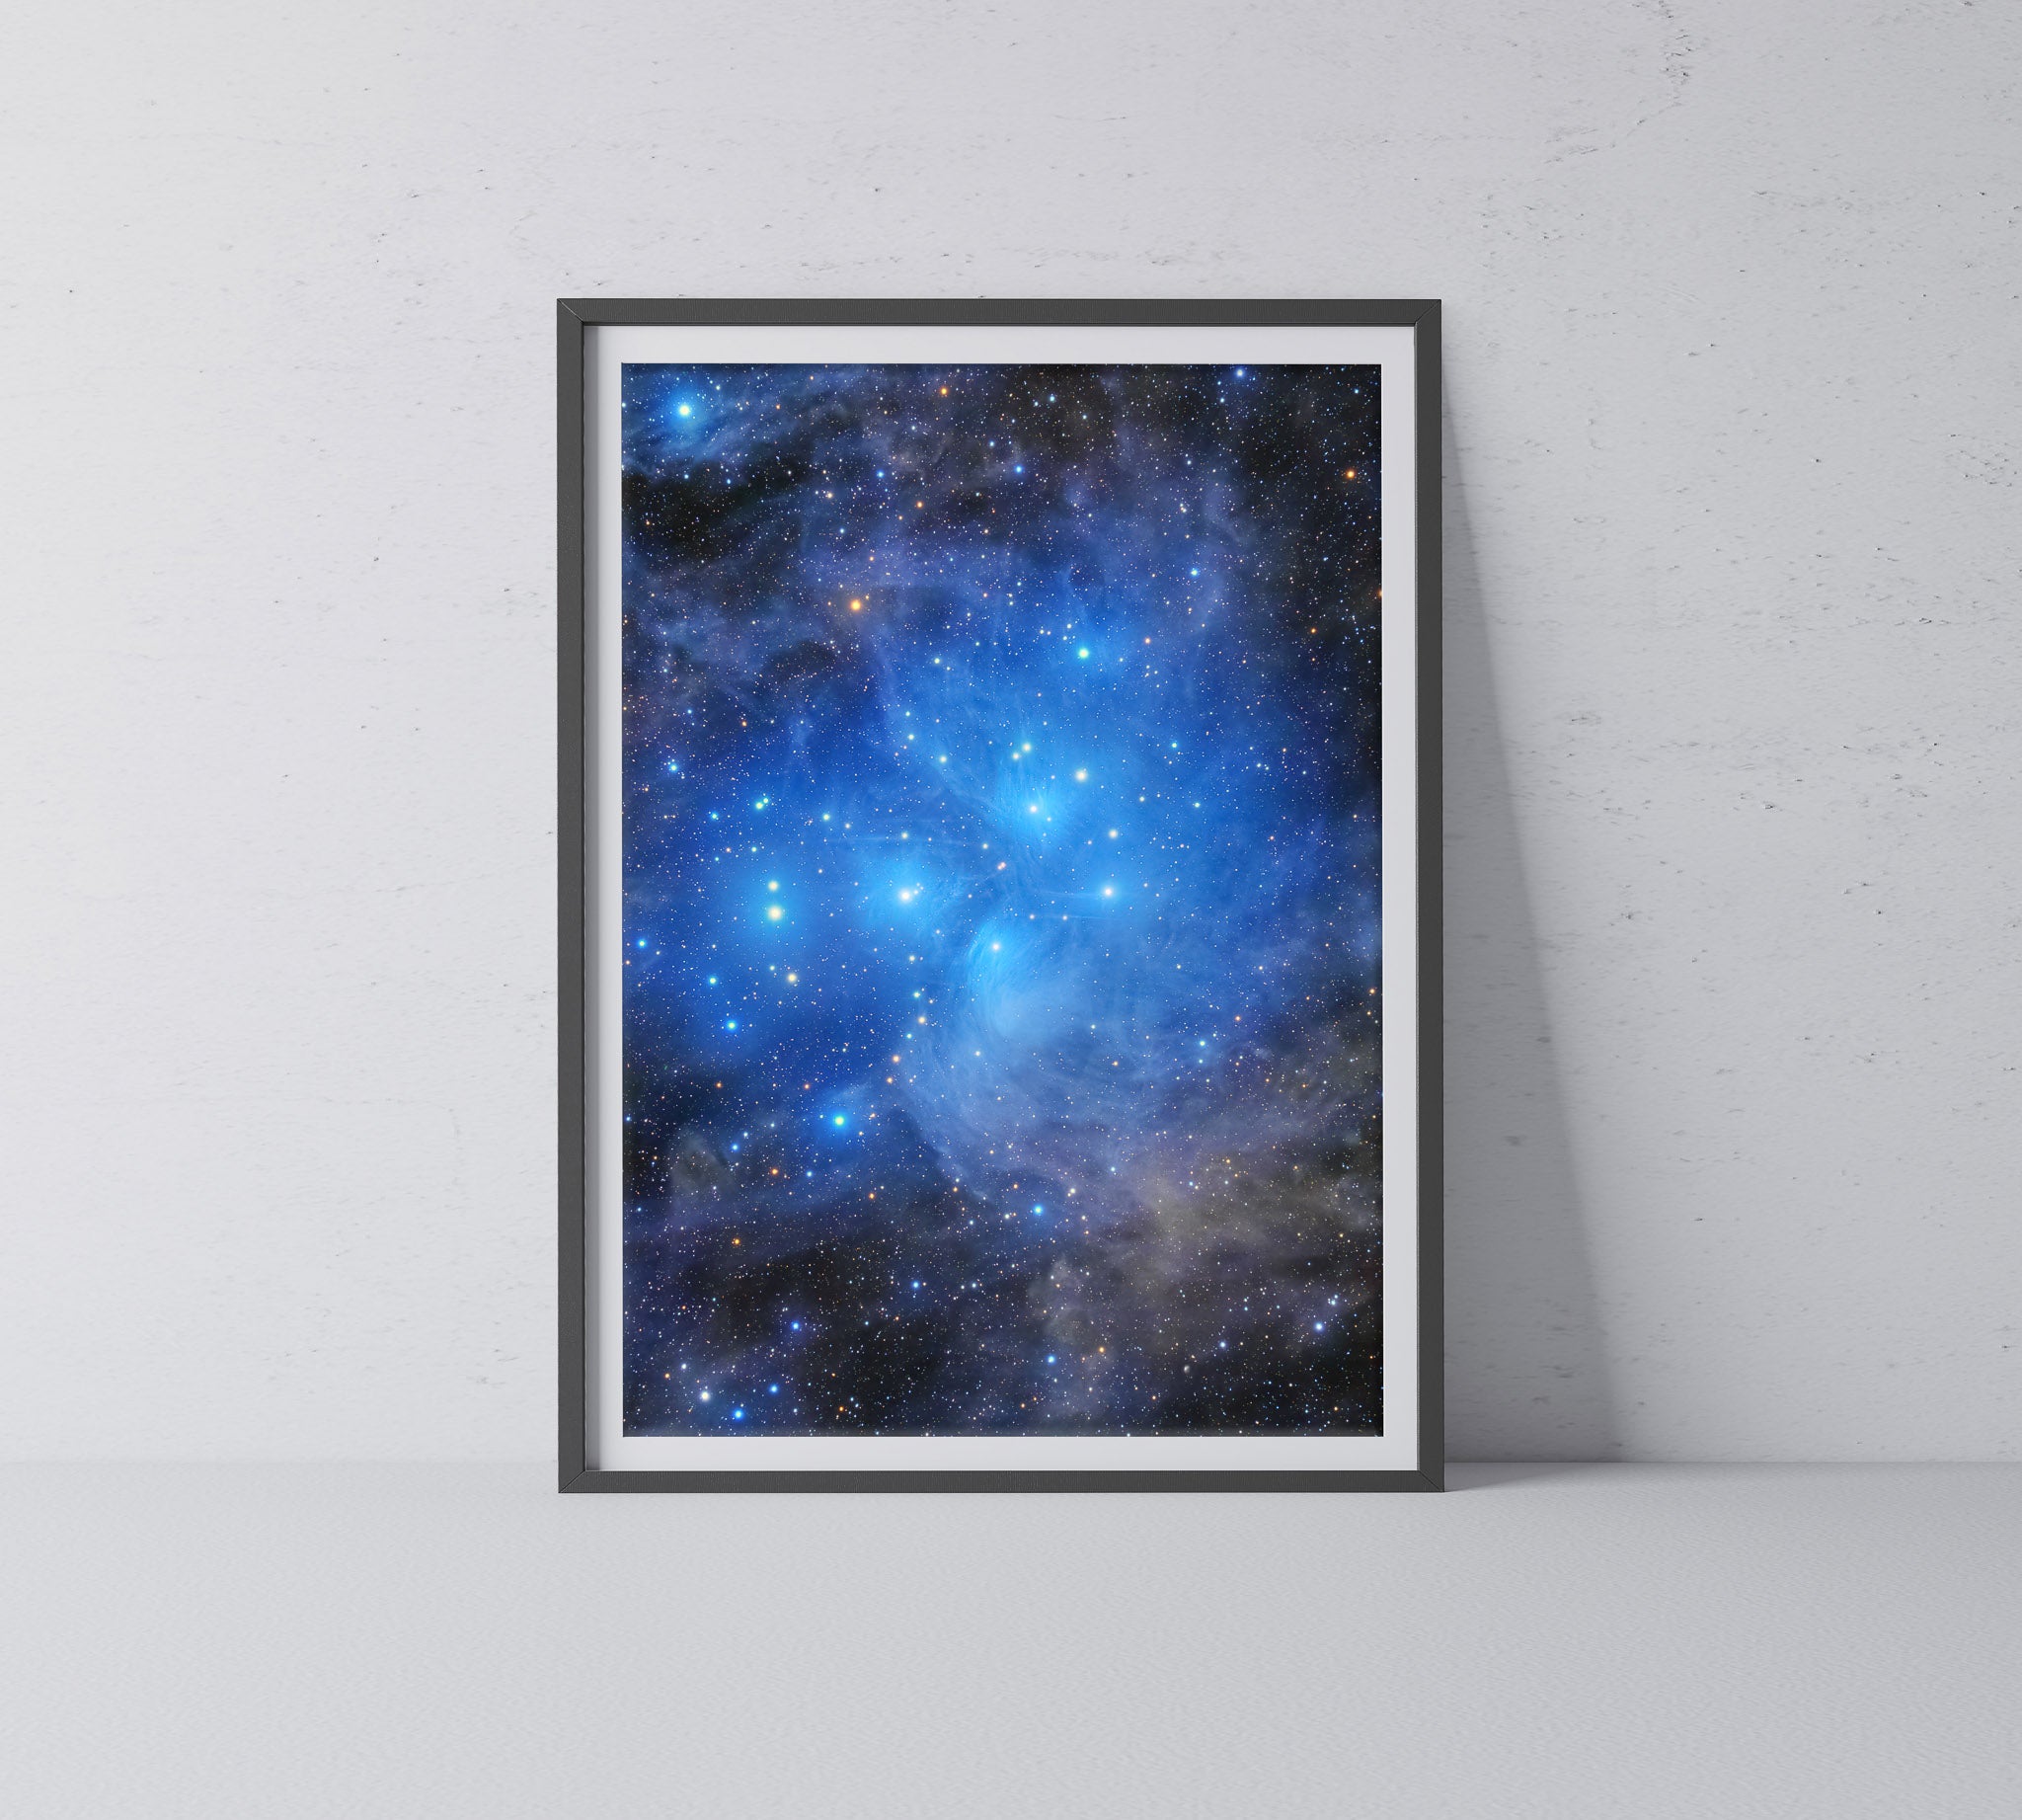 The Pleiades - M45